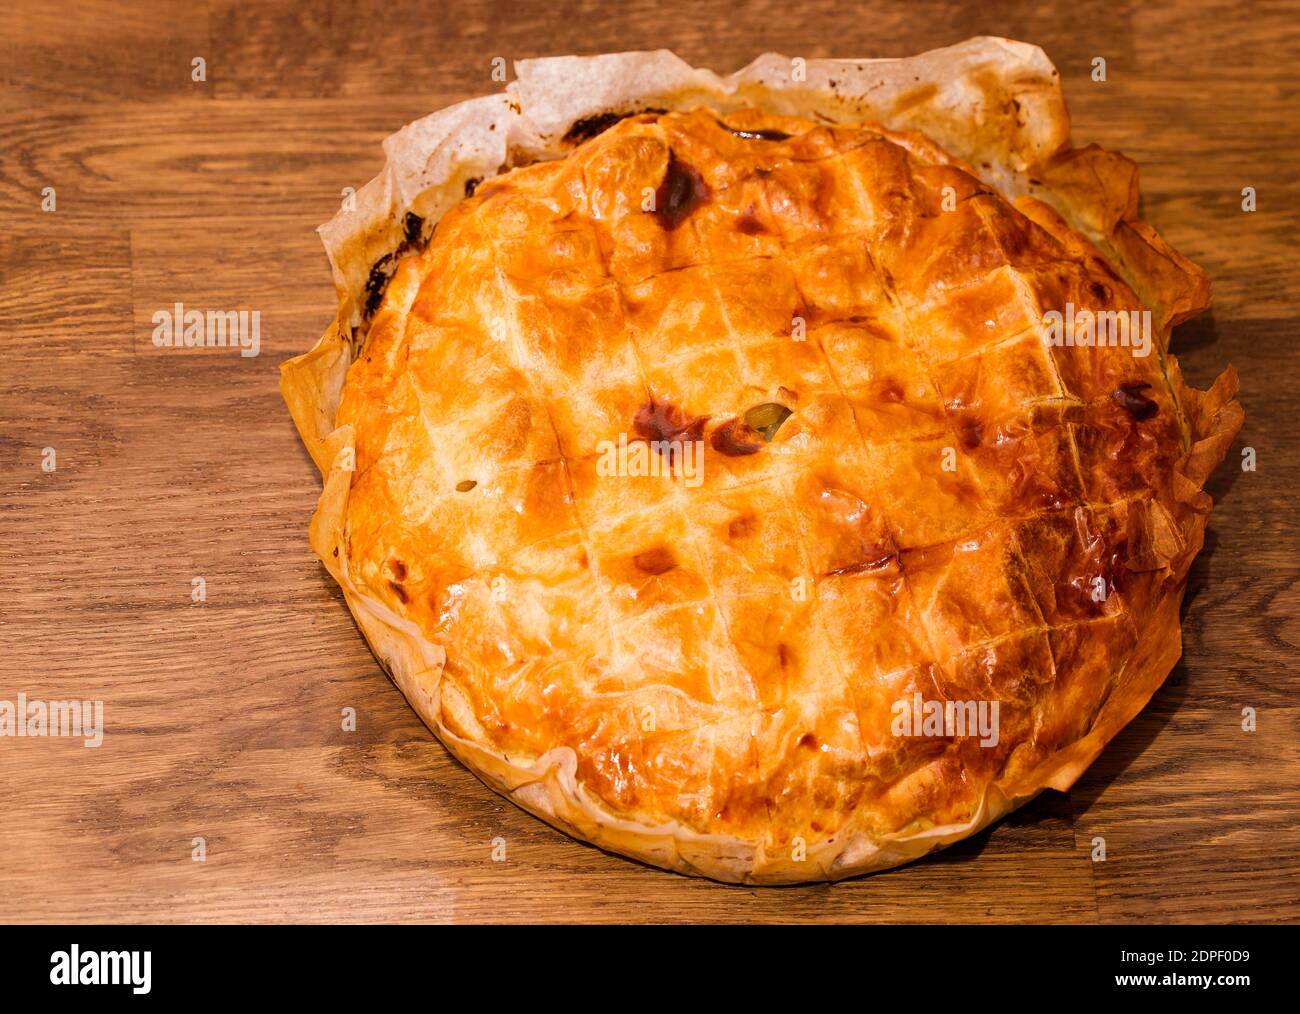 Baked potato pie on a woden table Stock Photo